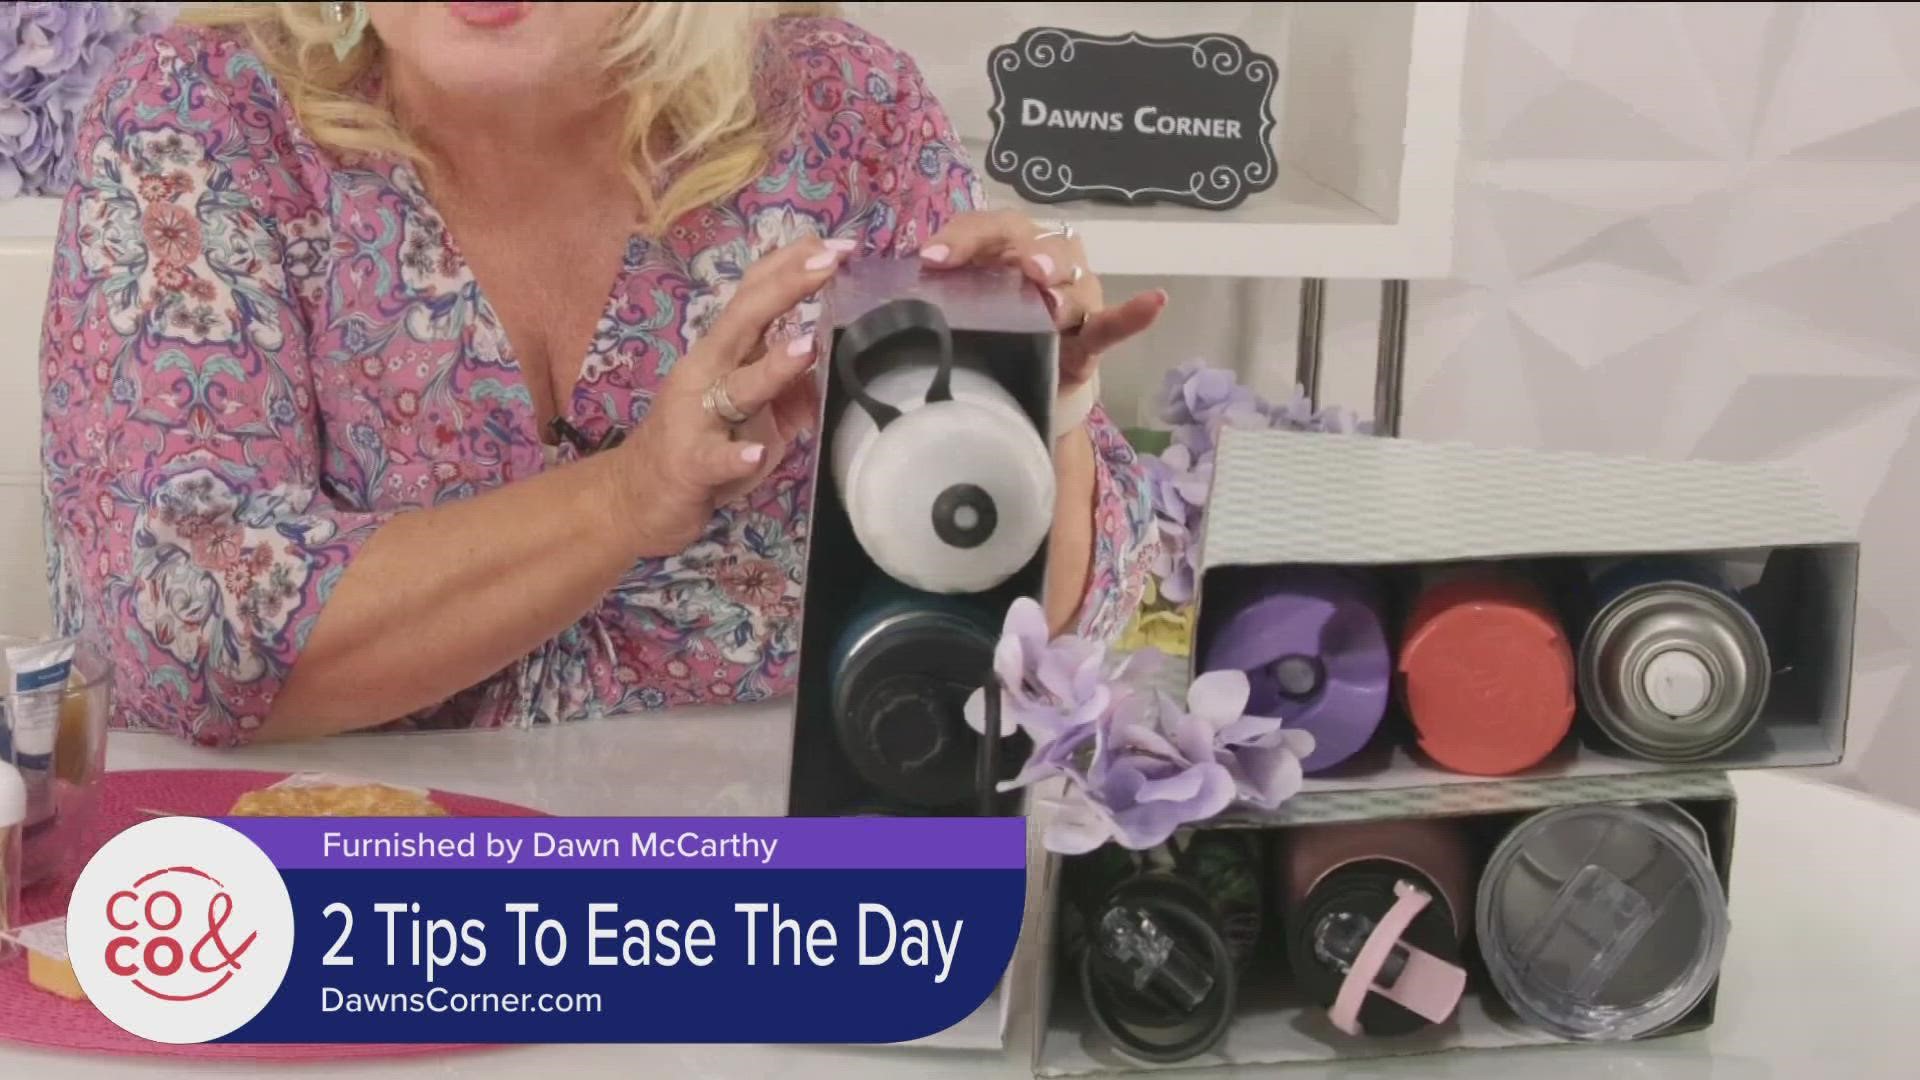 Follow super shopper Dawn McCarthy and get more money-saving tips online at DawnsCorner.com.